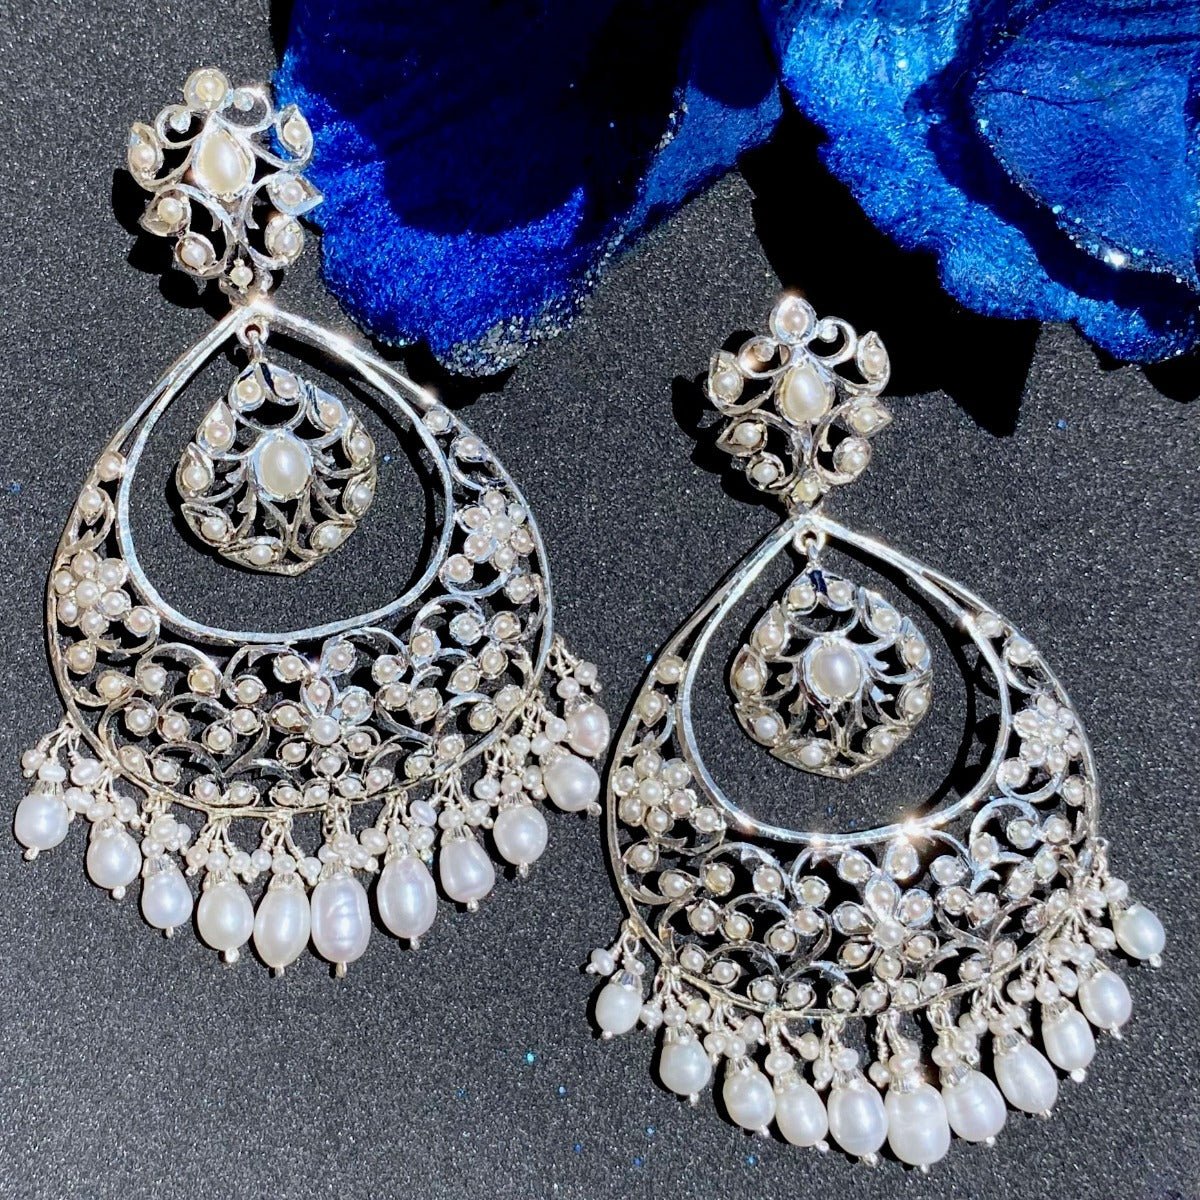 Fusion Earrings | Edwardian Era Inspired Design | Pearls on Silver